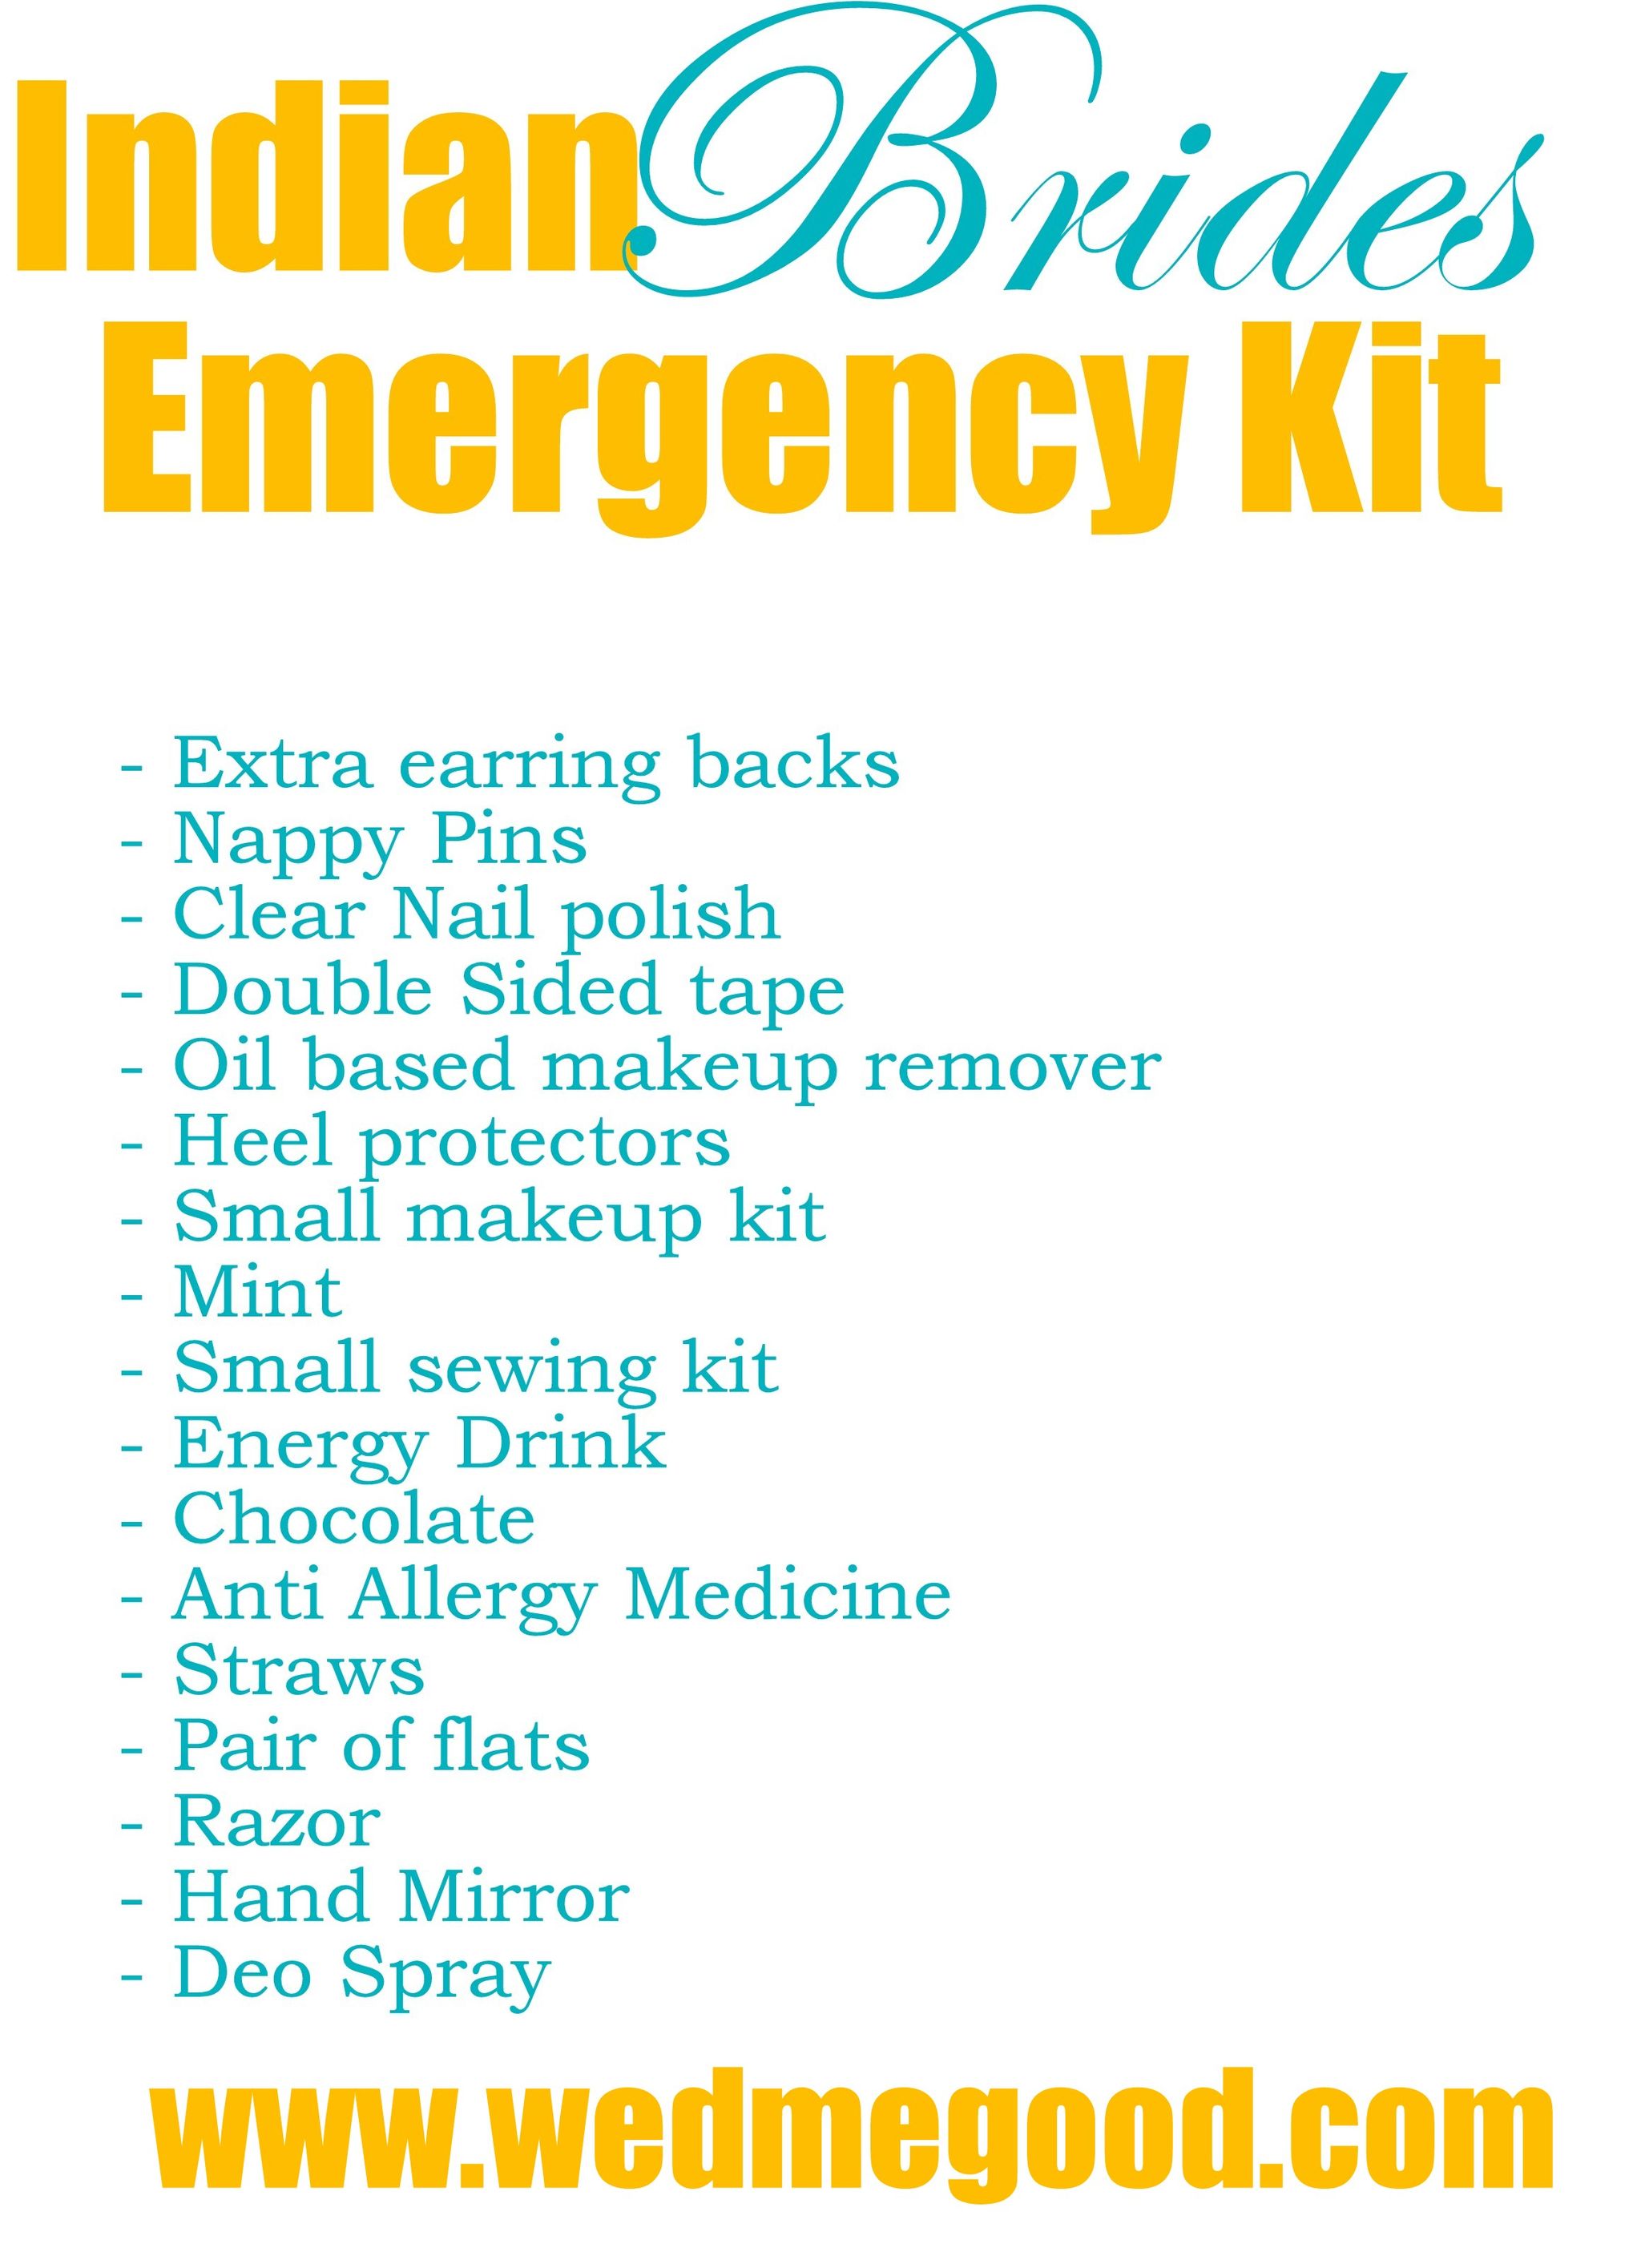 bridal emergency kit1